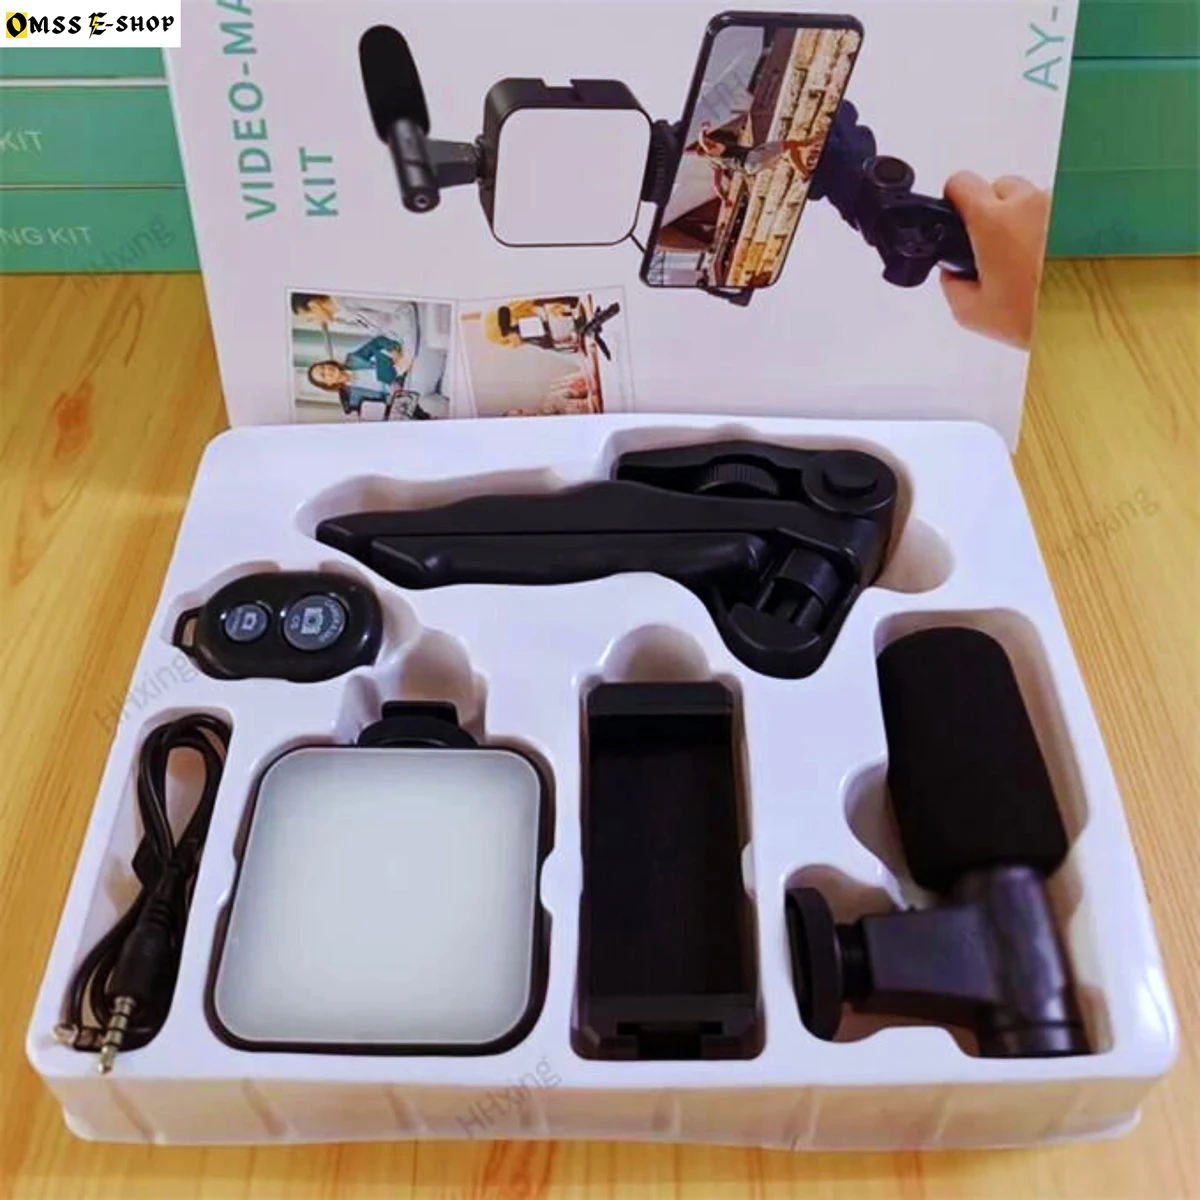 AY-49 Smartphone Vlogging Kit Video Recording Equipment with Tripod Fill Light Shutter for Camera, Phone, YouTube Set Vlogger Kits